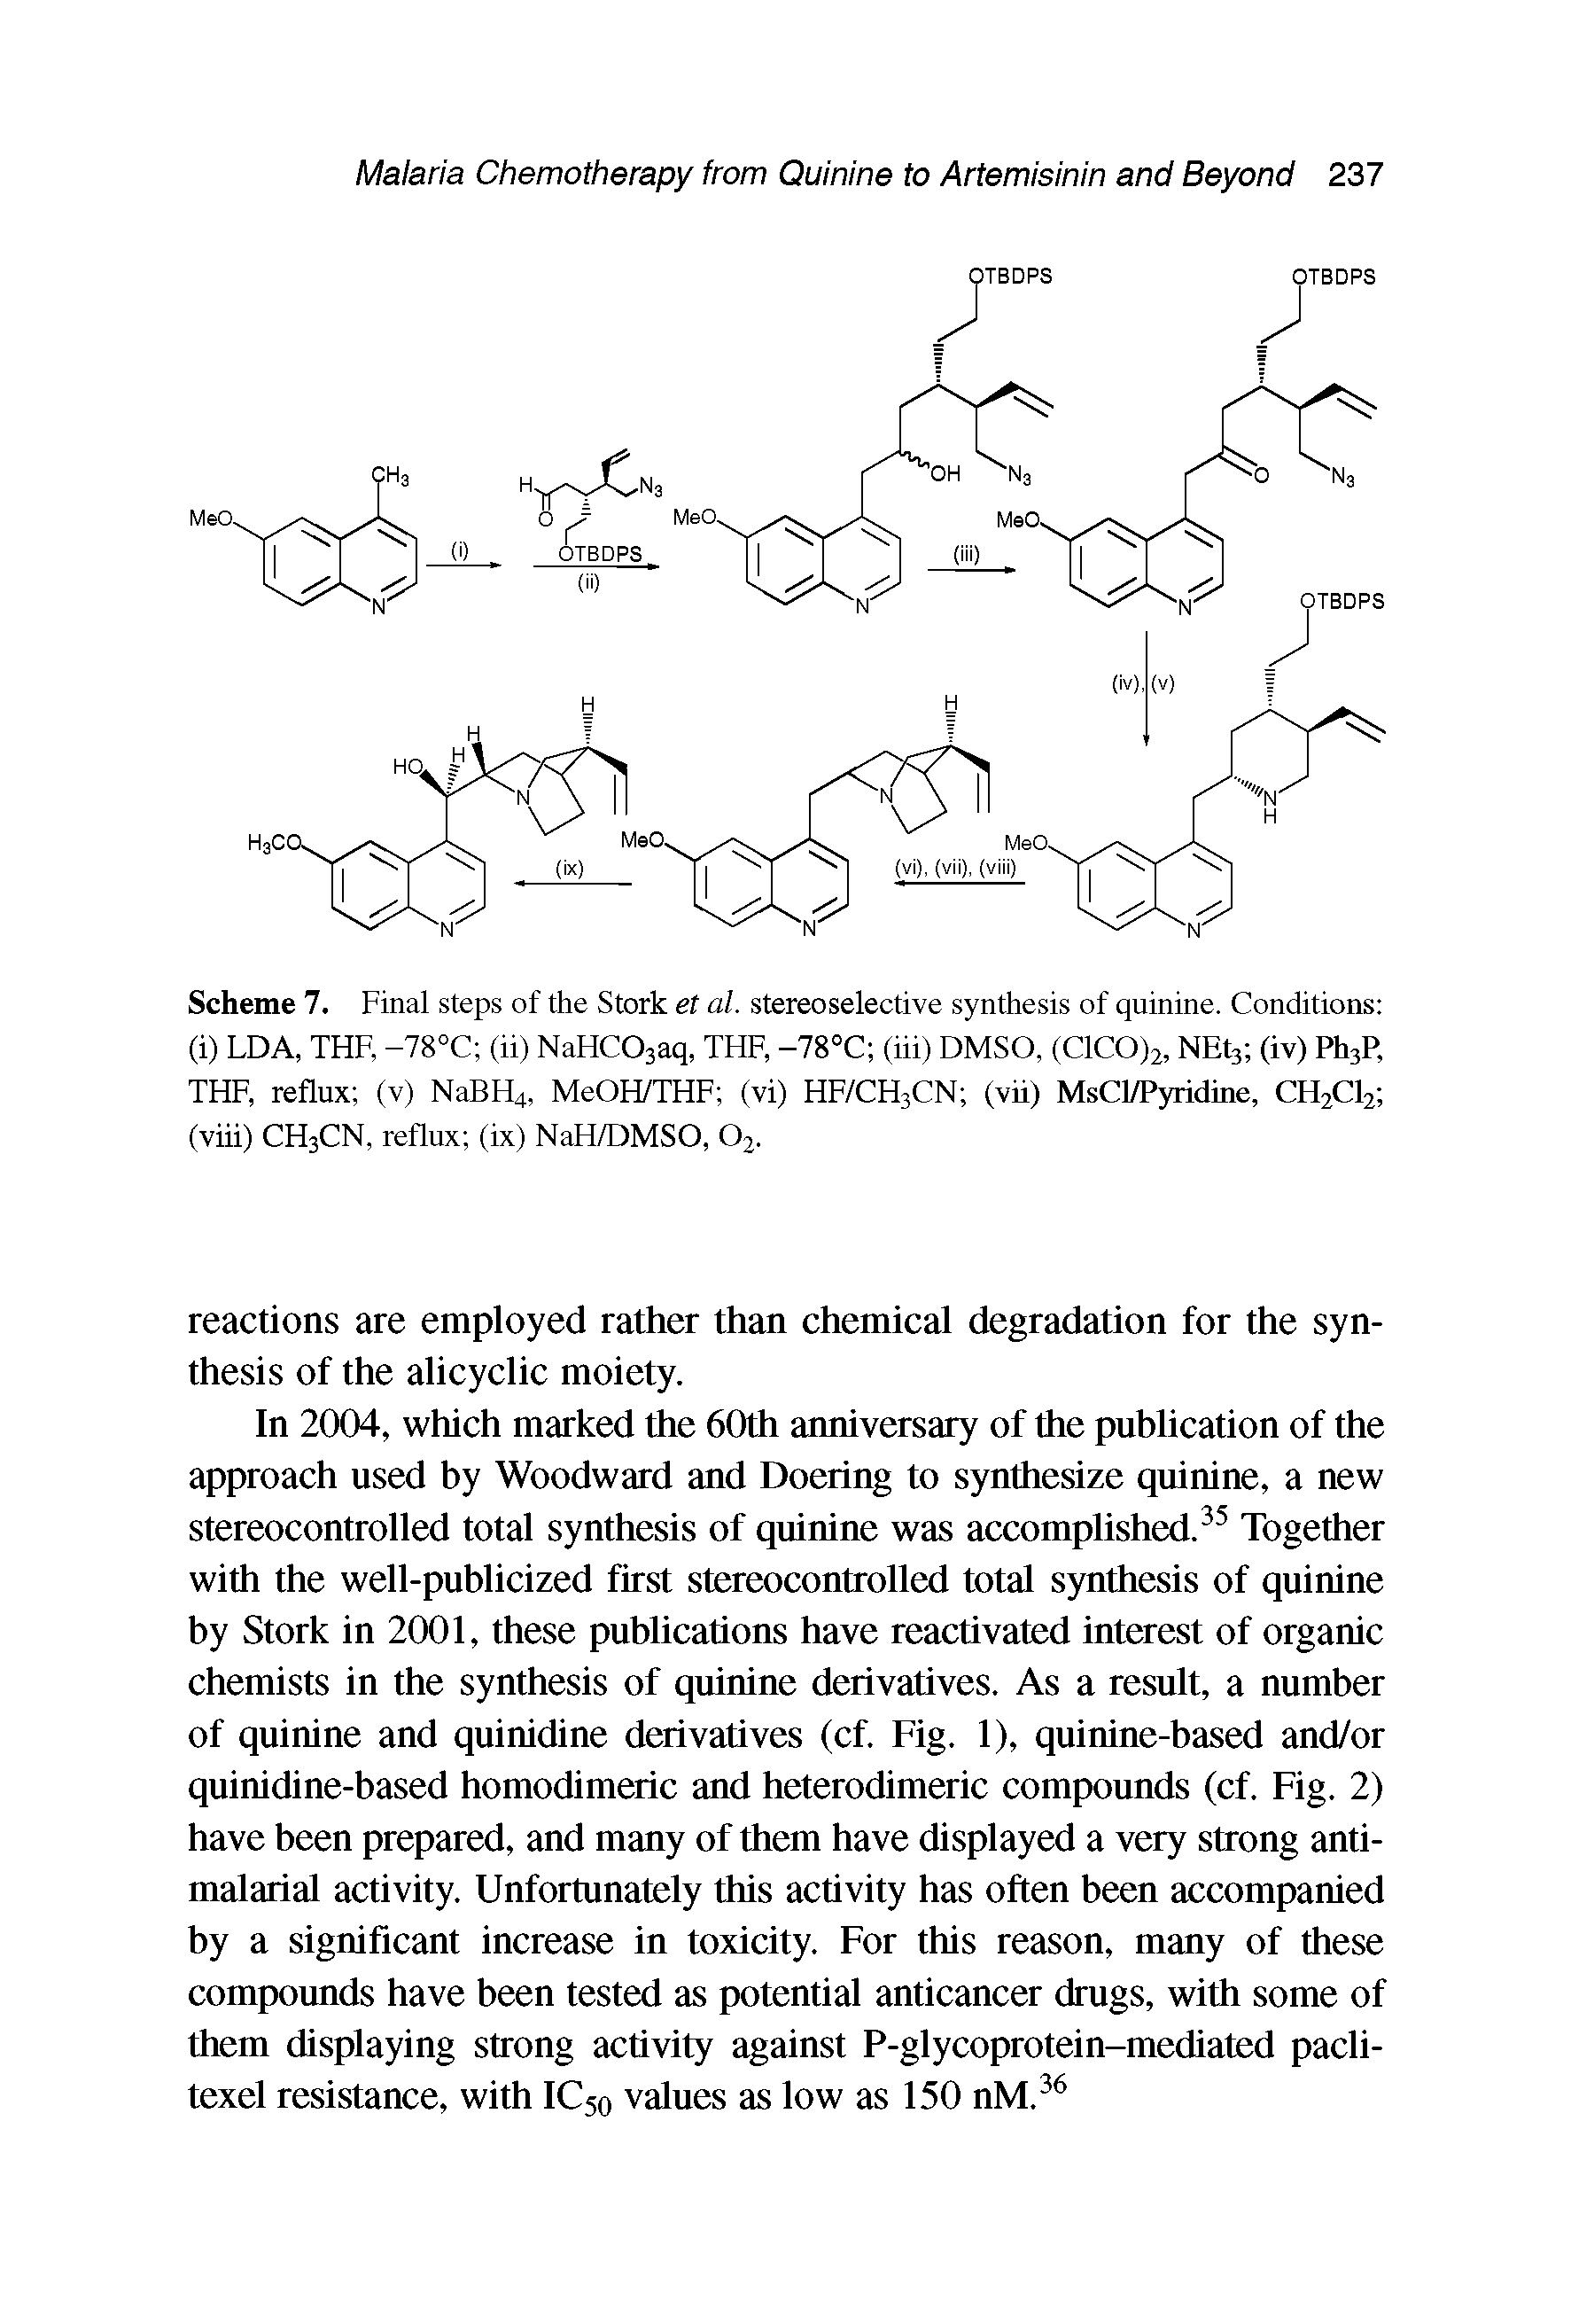 Scheme 7. Final steps of the Stork et al. stereoselective synthesis of quinine. Conditions (i) LDA, THF, -78°C (ii) NaHCOjaq, THF, -78°C (hi) DMSO, (ClCO)2, NEtj (iv) PhsP, THF, reflux (v) NaBH4, MeOH/THF (vi) HF/CH3CN (vh) MsCPPyridine, CH2CI2 (viii) CH3CN, reflux (ix) NaH/DMSO, O2.